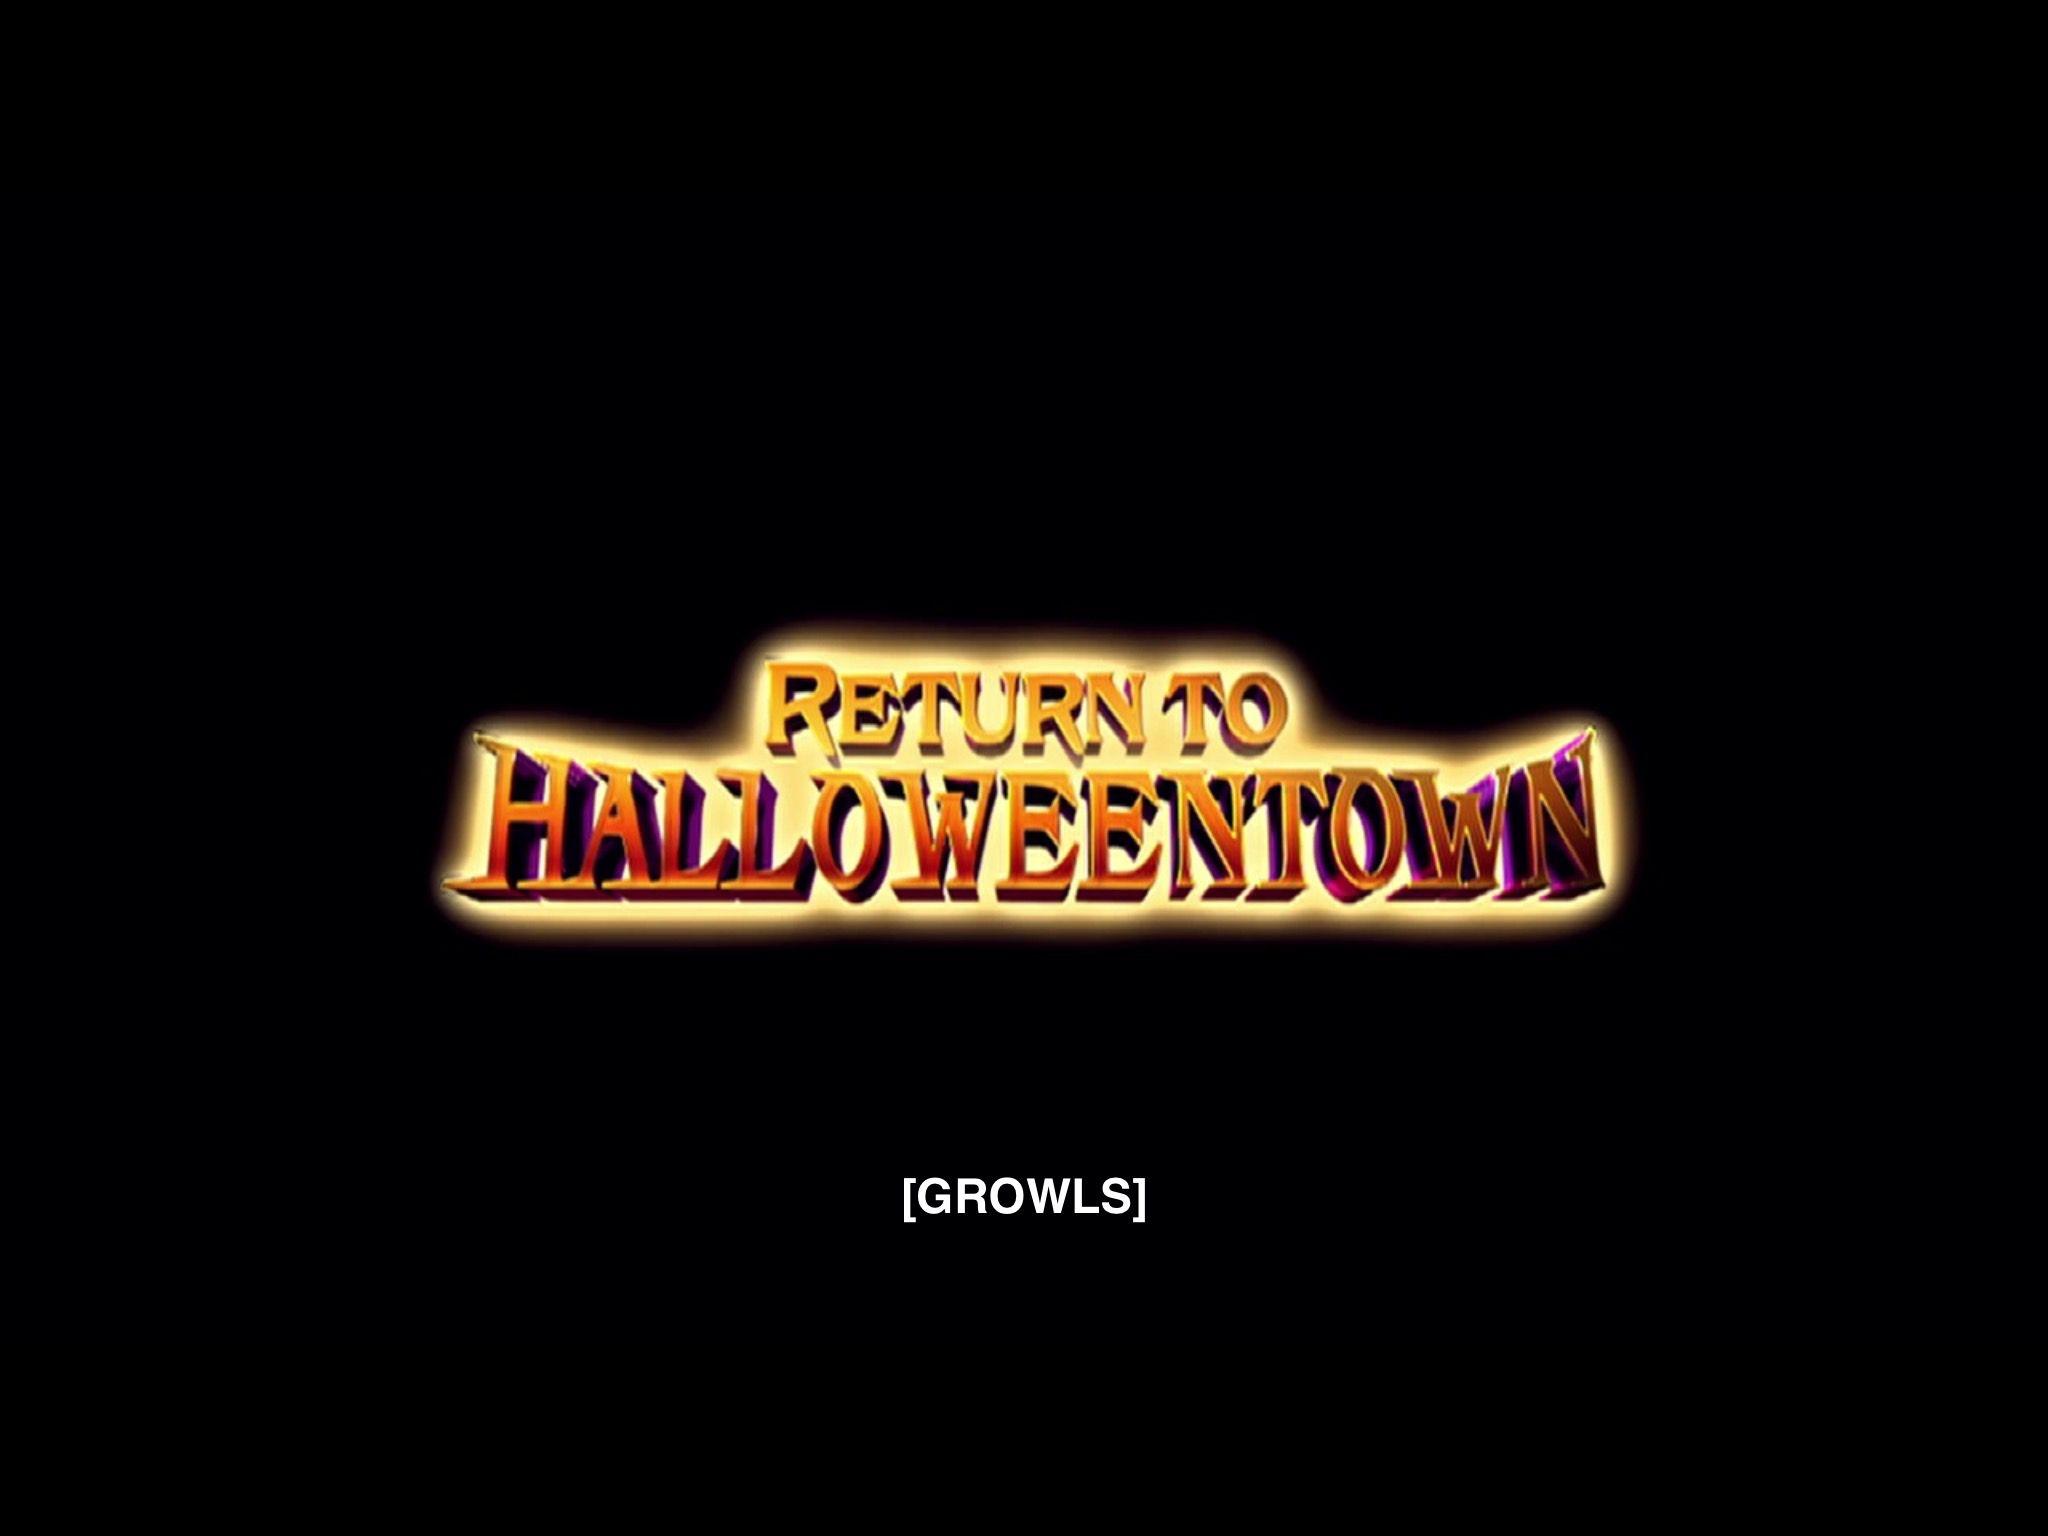 Halloweentown Logo - Halloween Film Review: Return To Halloweentown dir. David